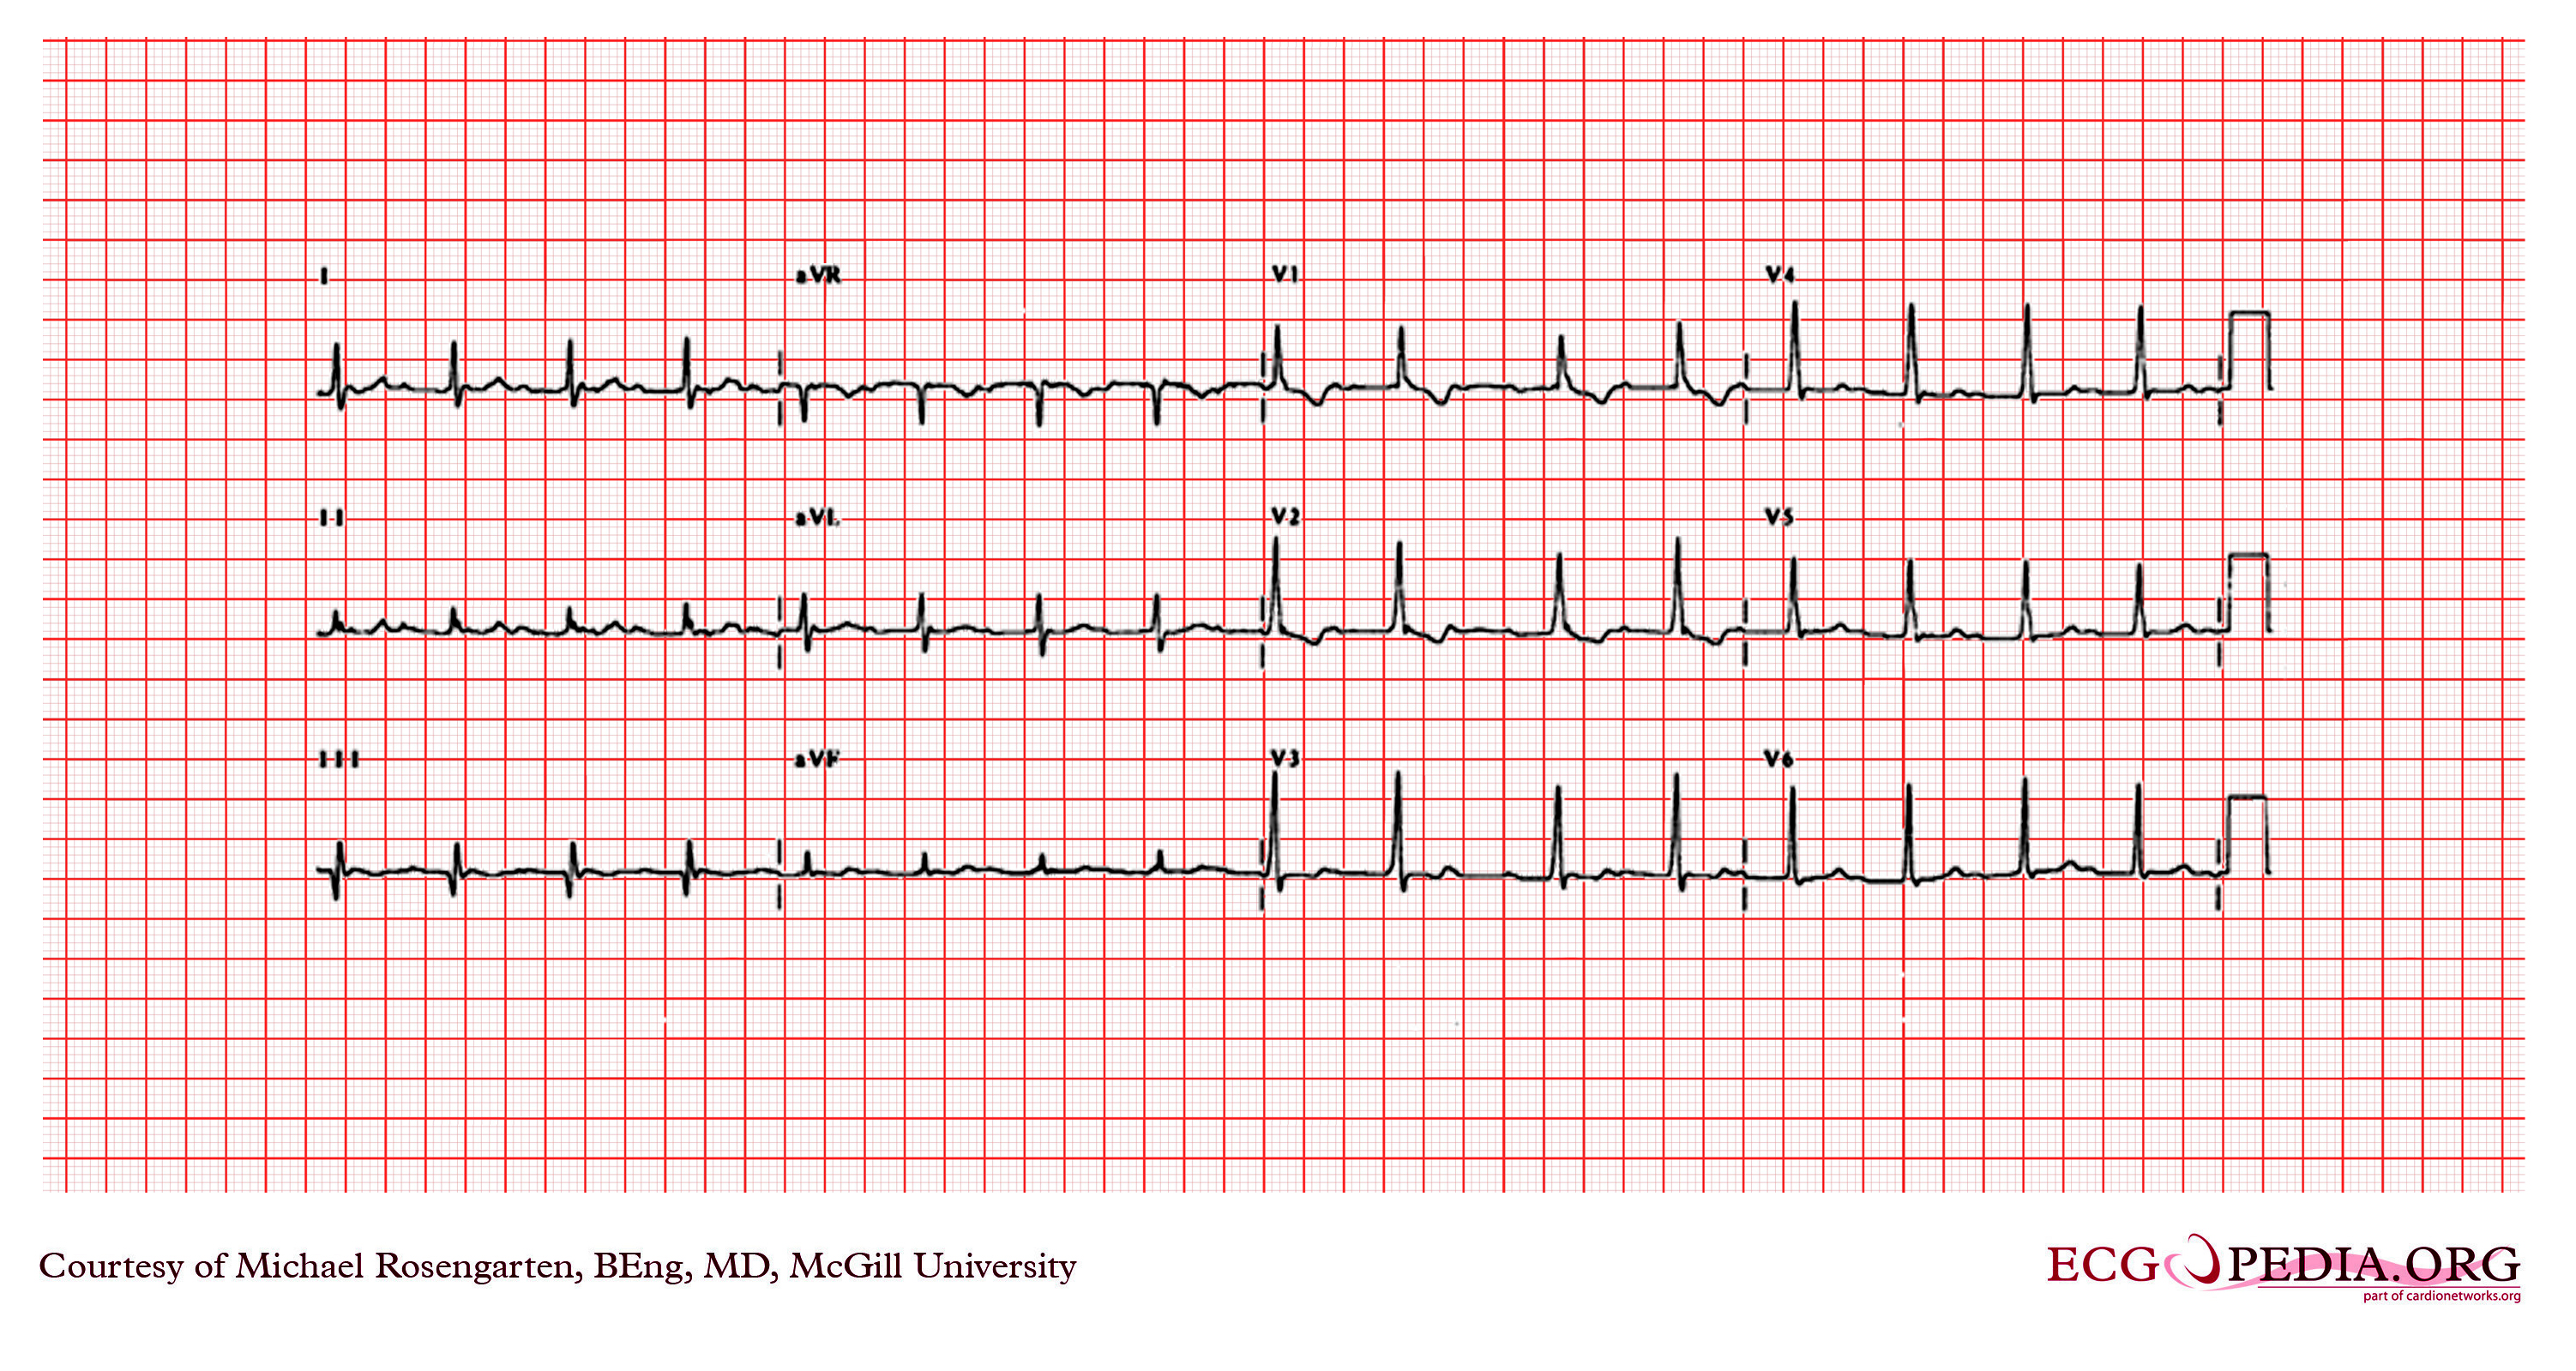 File:Wide complex tachycardia2.jpg